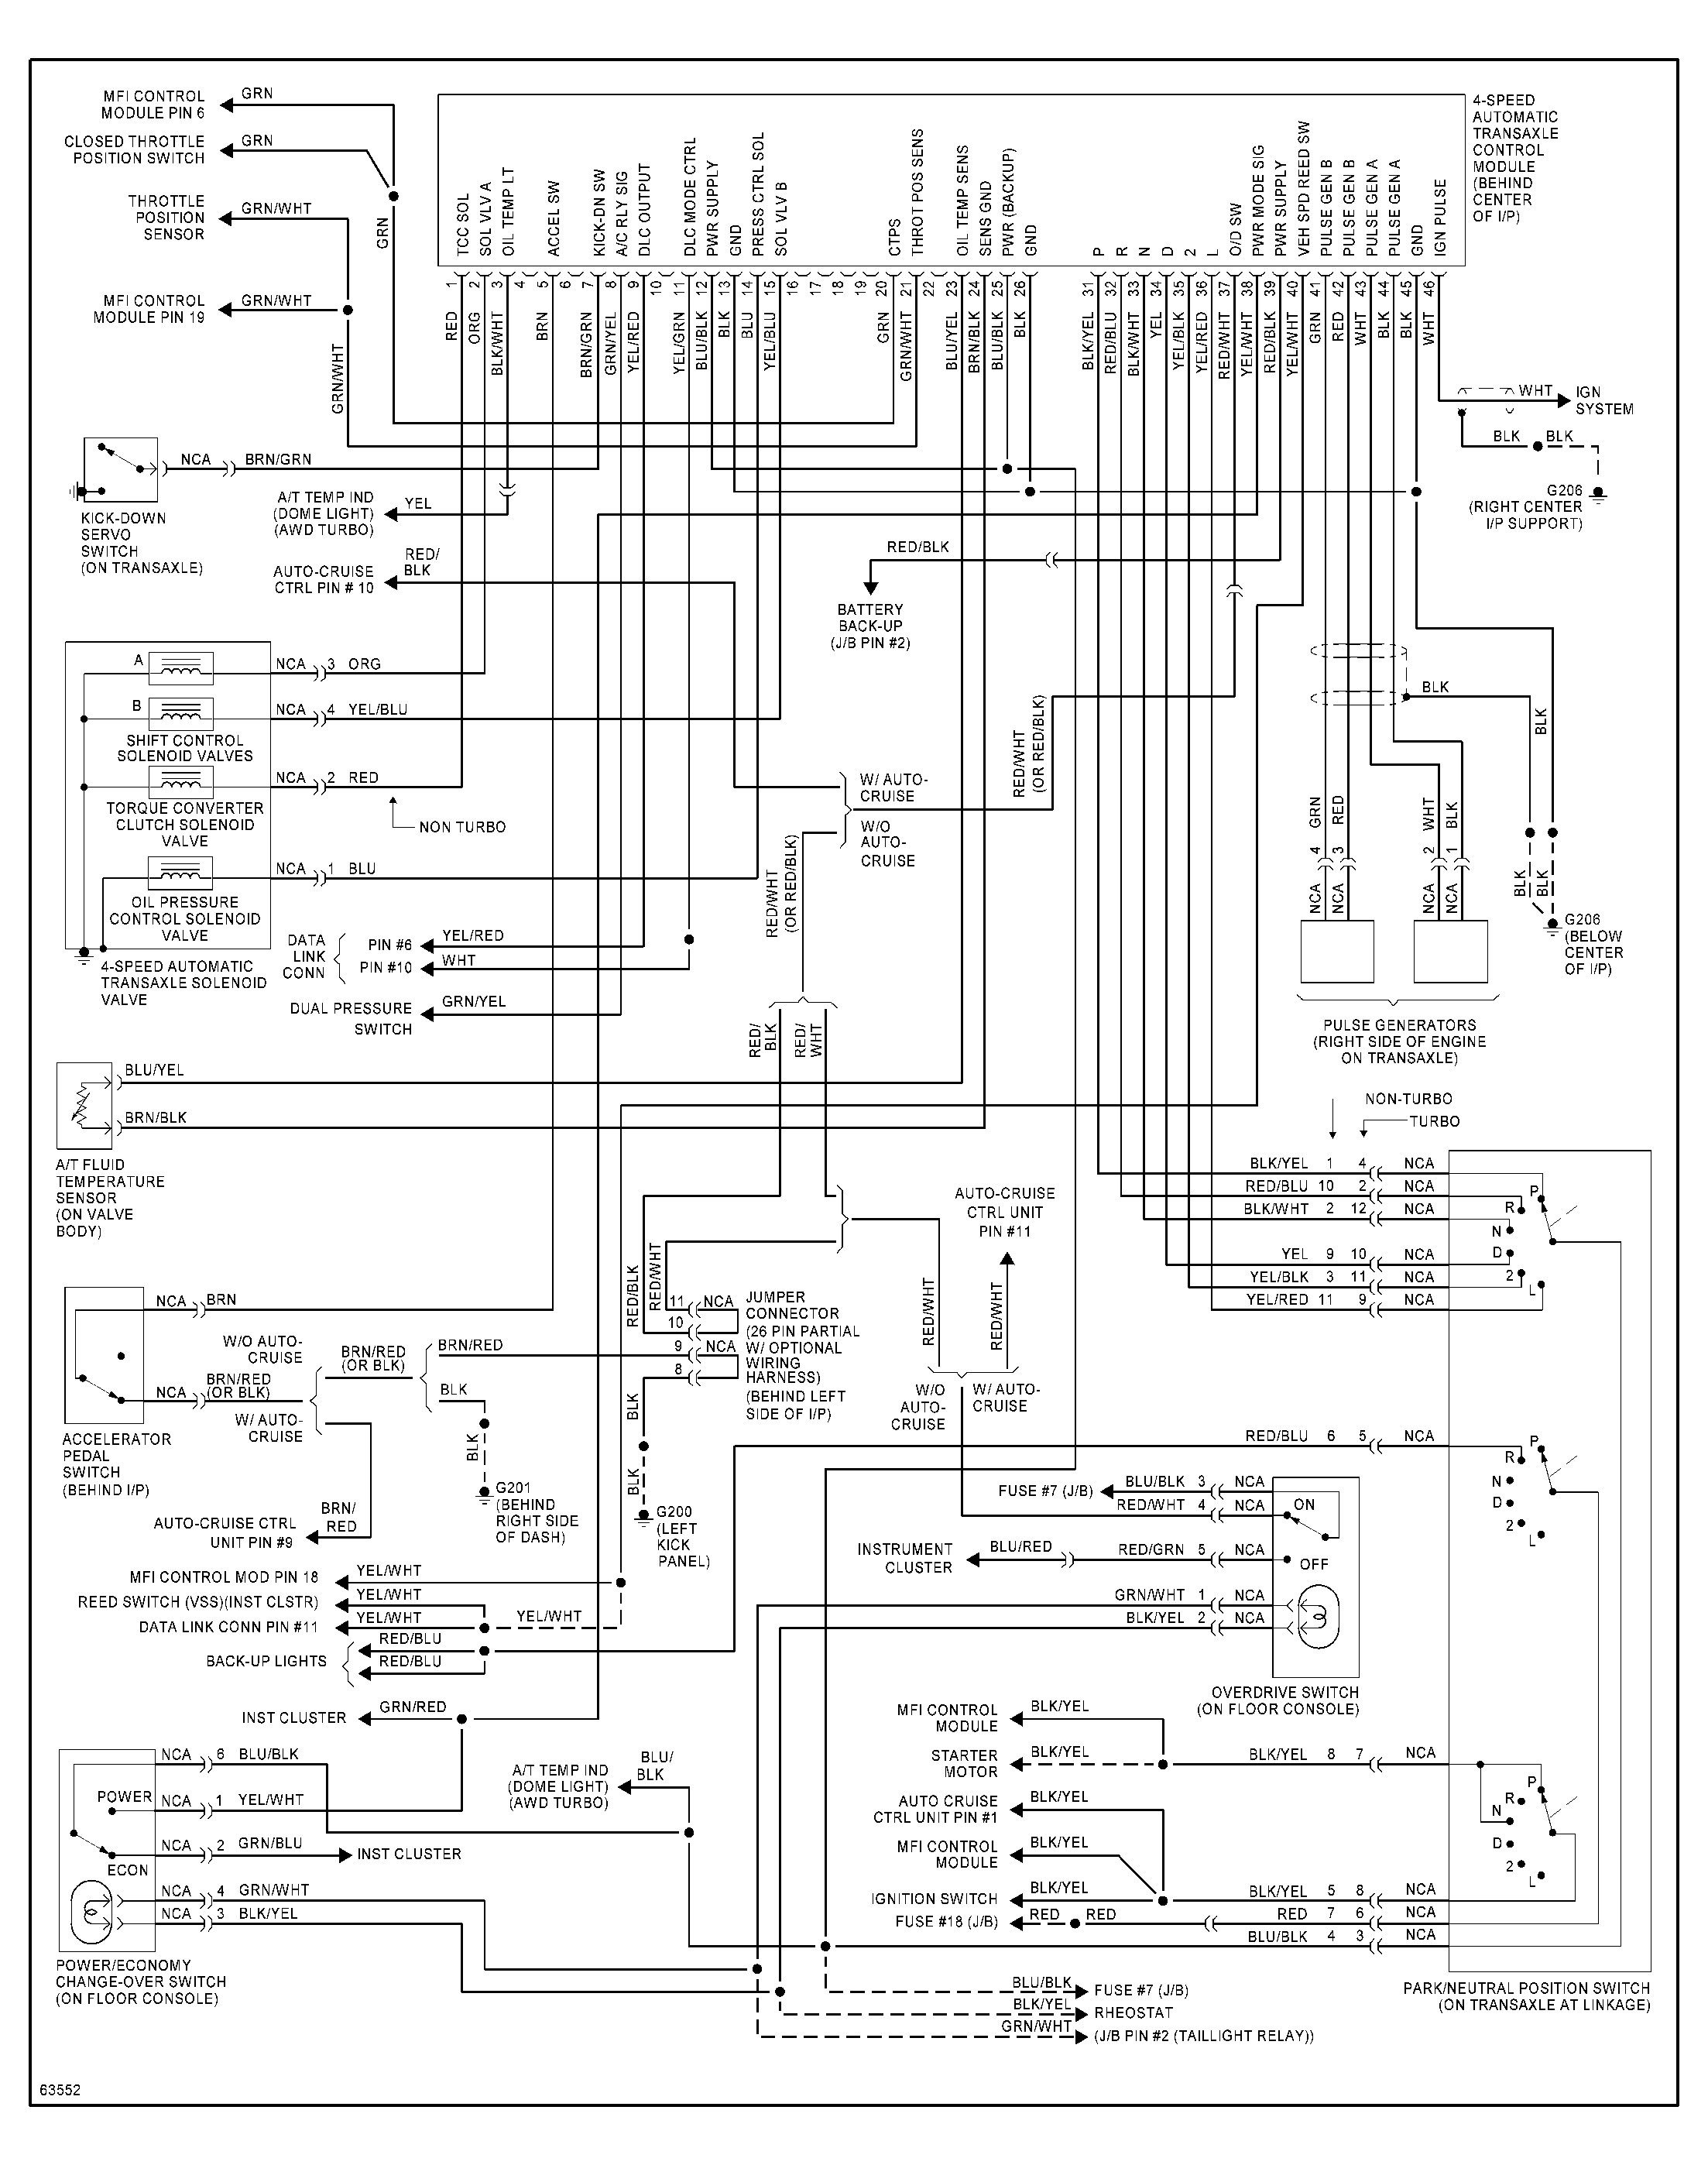 Mitsubishi Eclipse Wiring Diagram Automatic Dsm S Of Mitsubishi Eclipse Wiring Diagram